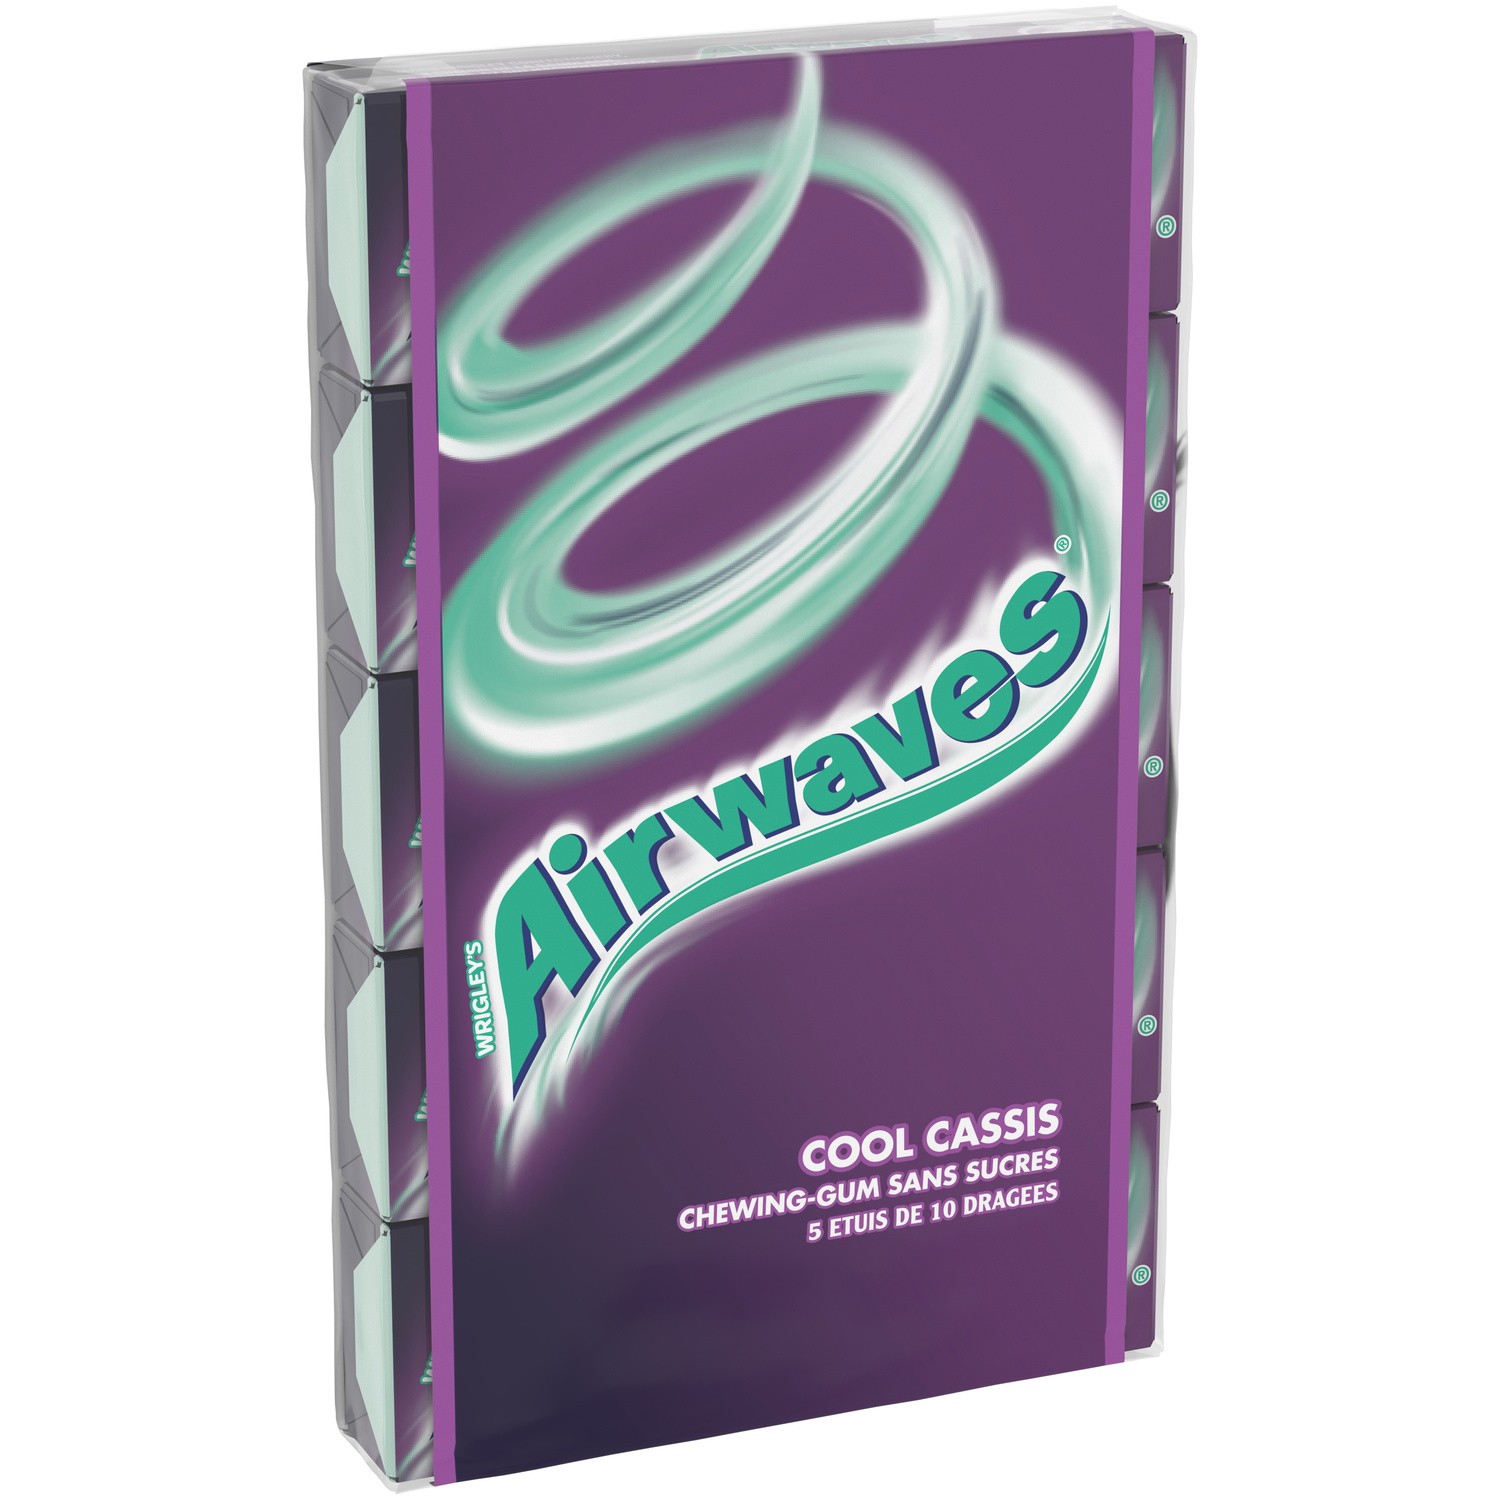 Chewing-gum sans sucres Cool Cassis